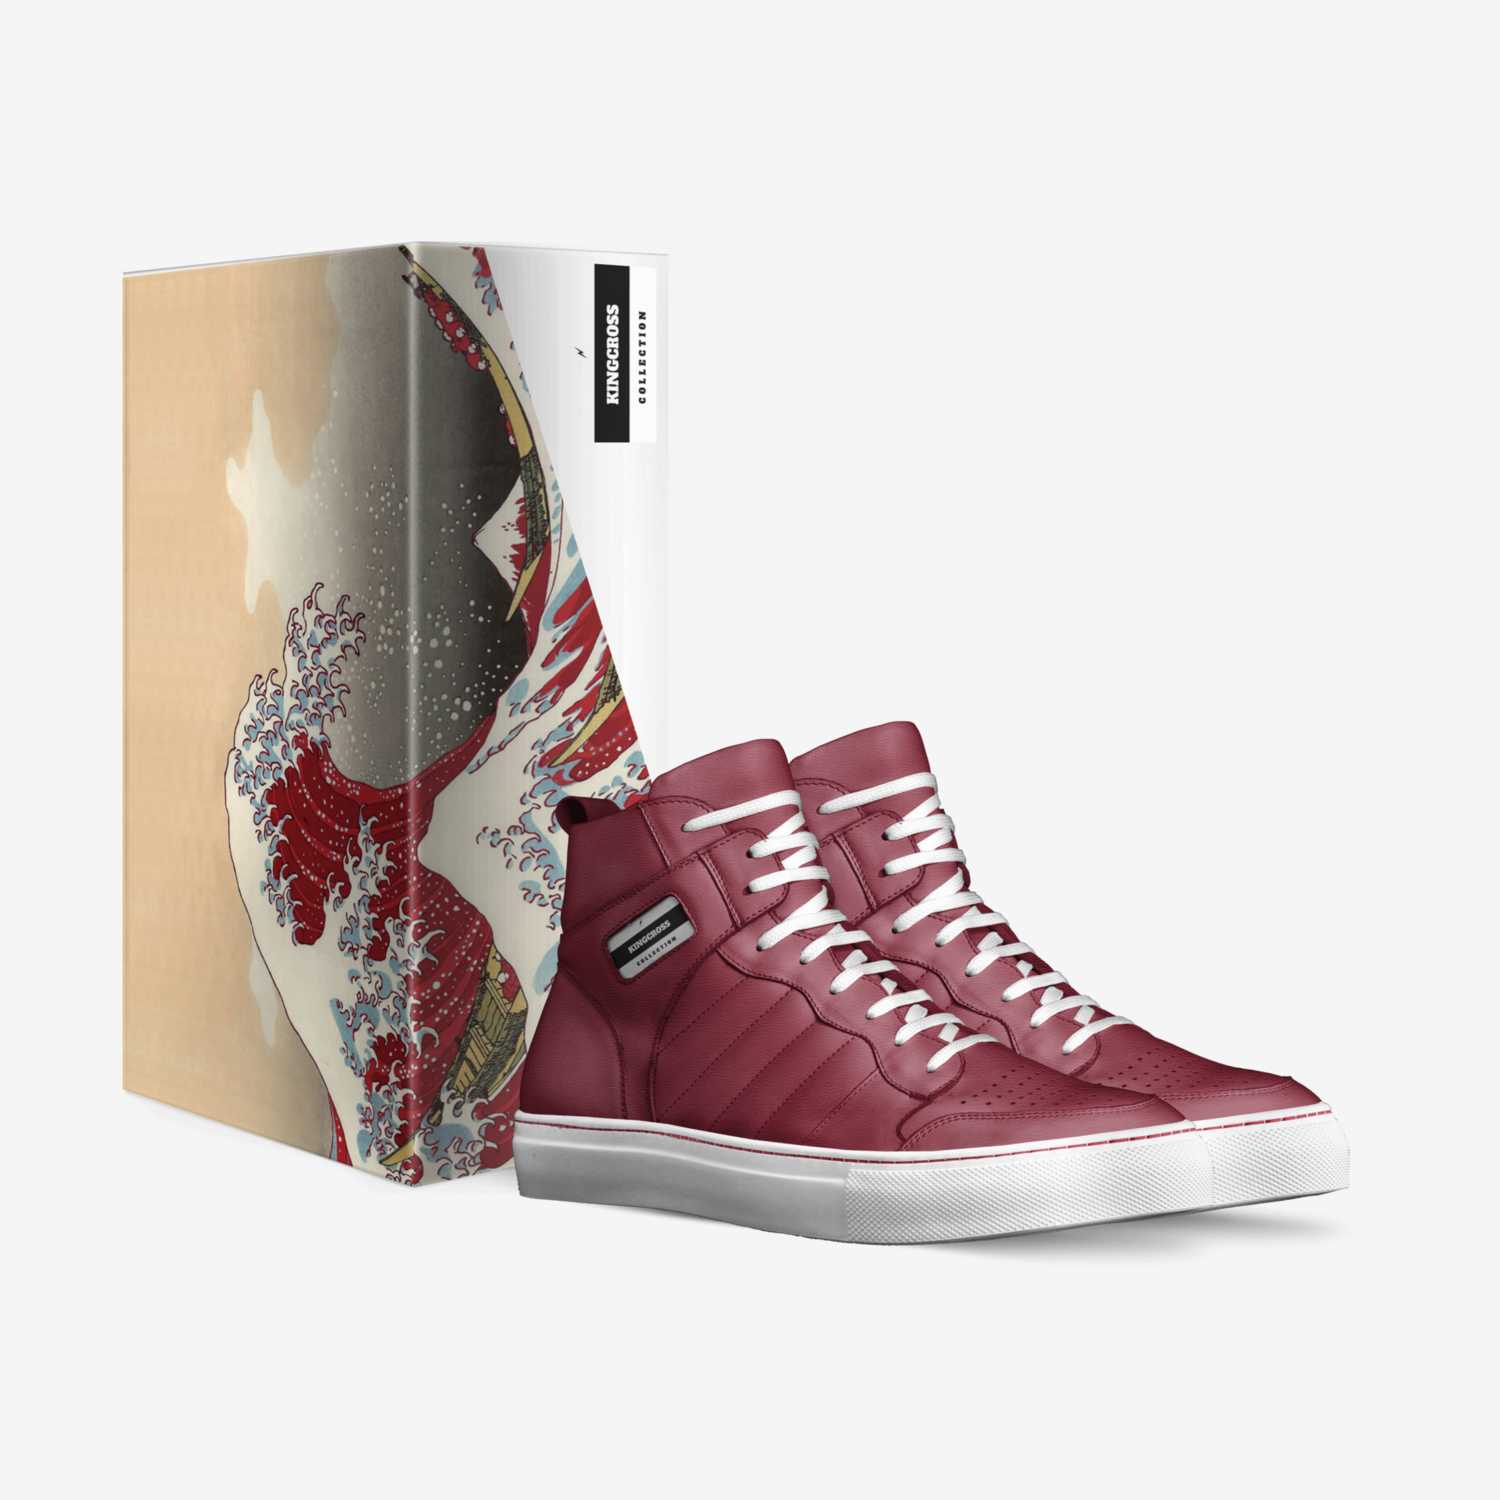 KINGCROSS custom made in Italy shoes by Shaun Stephenson | Box view